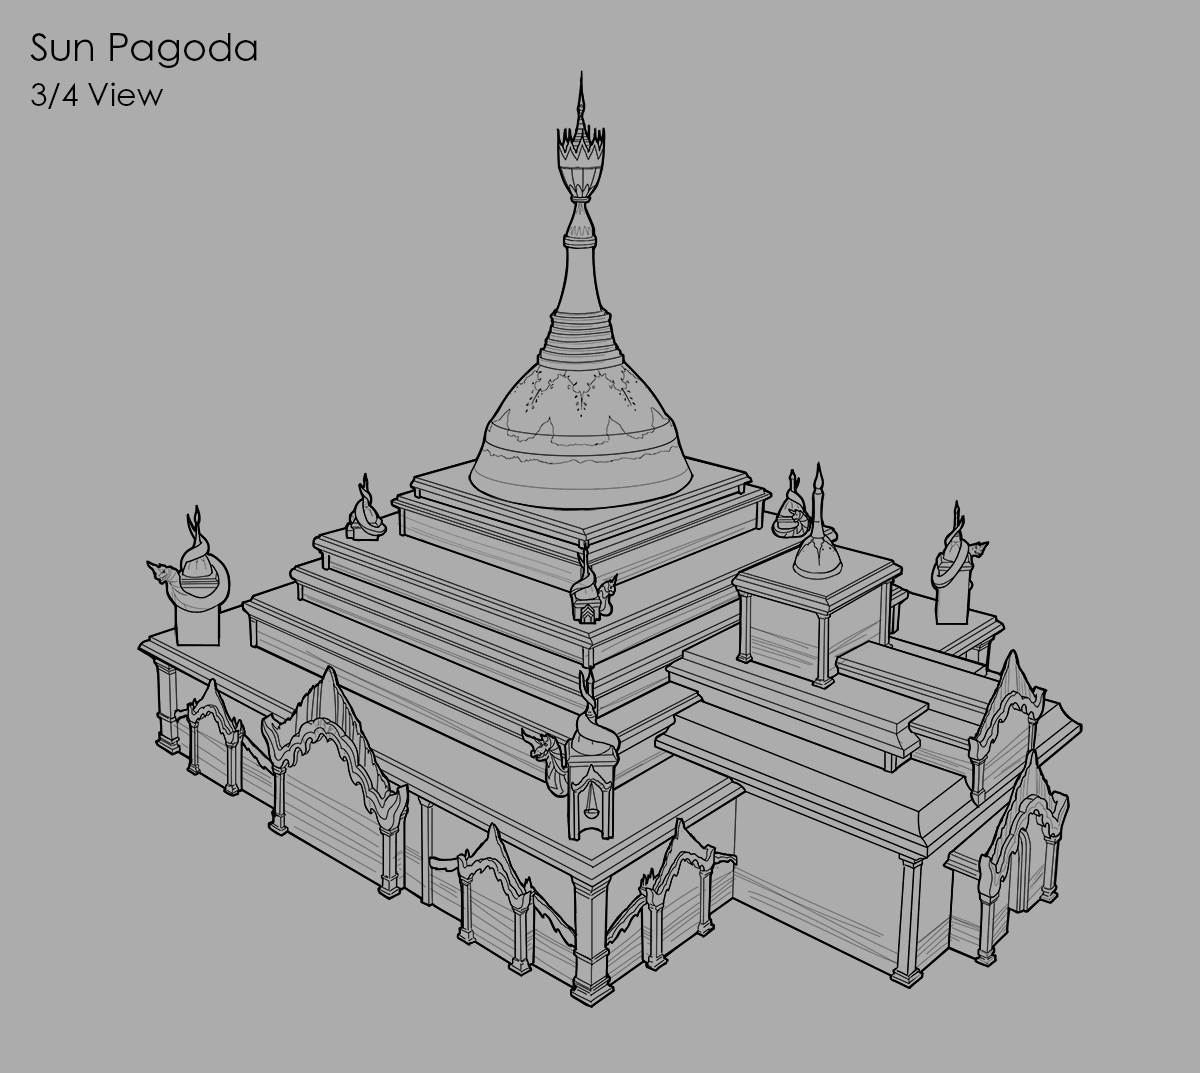 Three-quarter view of pagoda